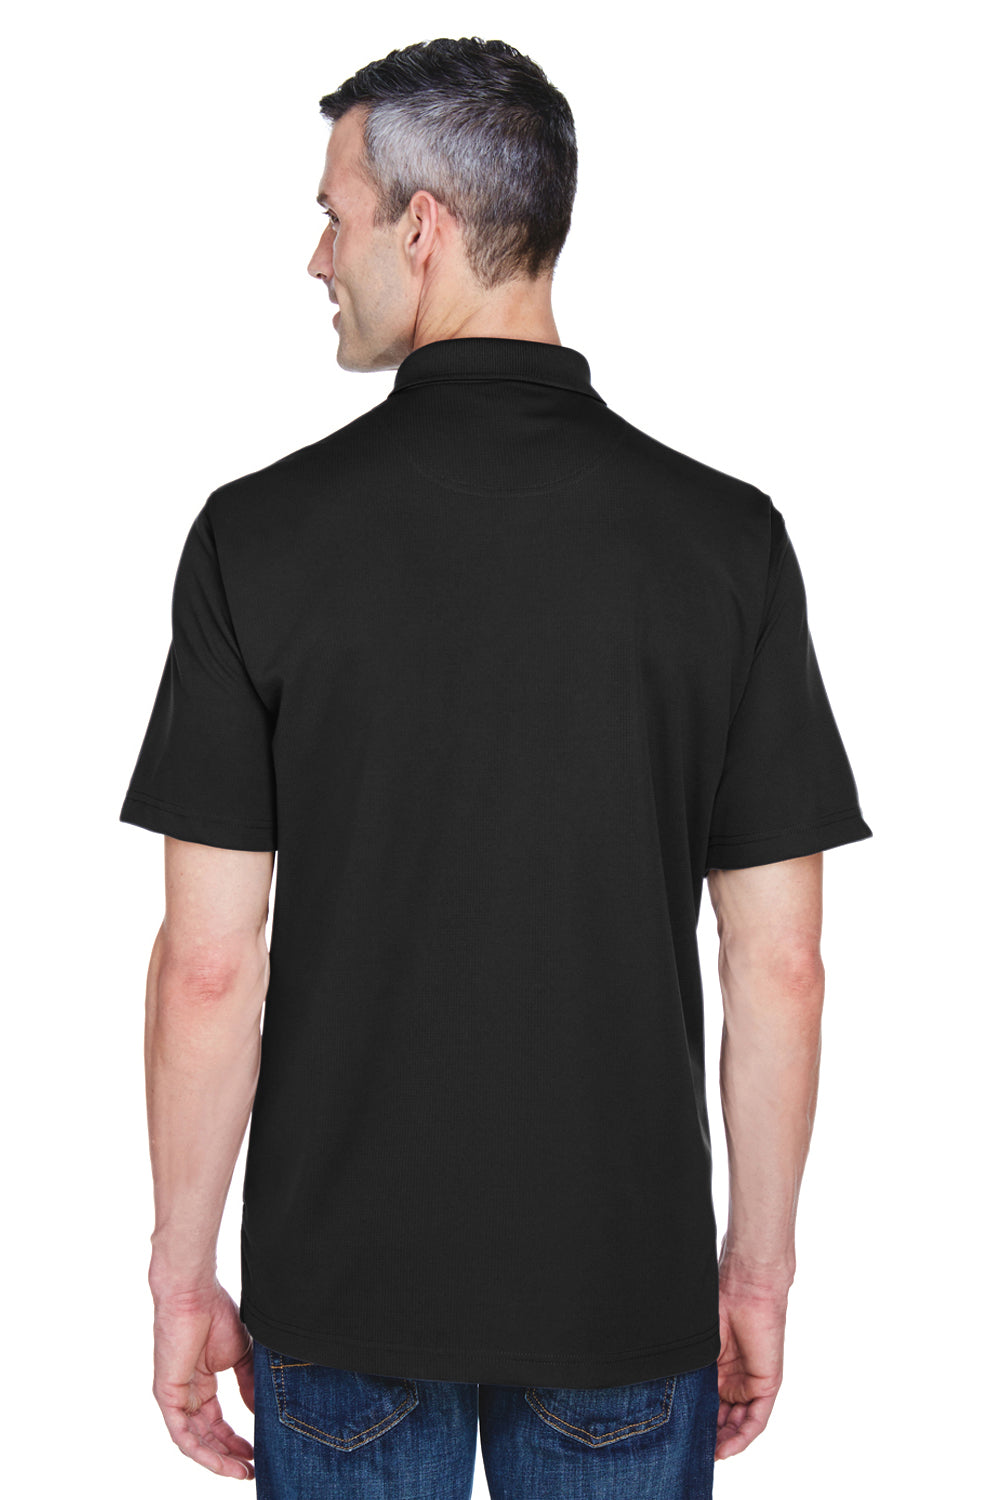 UltraClub 8445 Mens Cool & Dry Performance Moisture Wicking Short Sleeve Polo Shirt Black Back